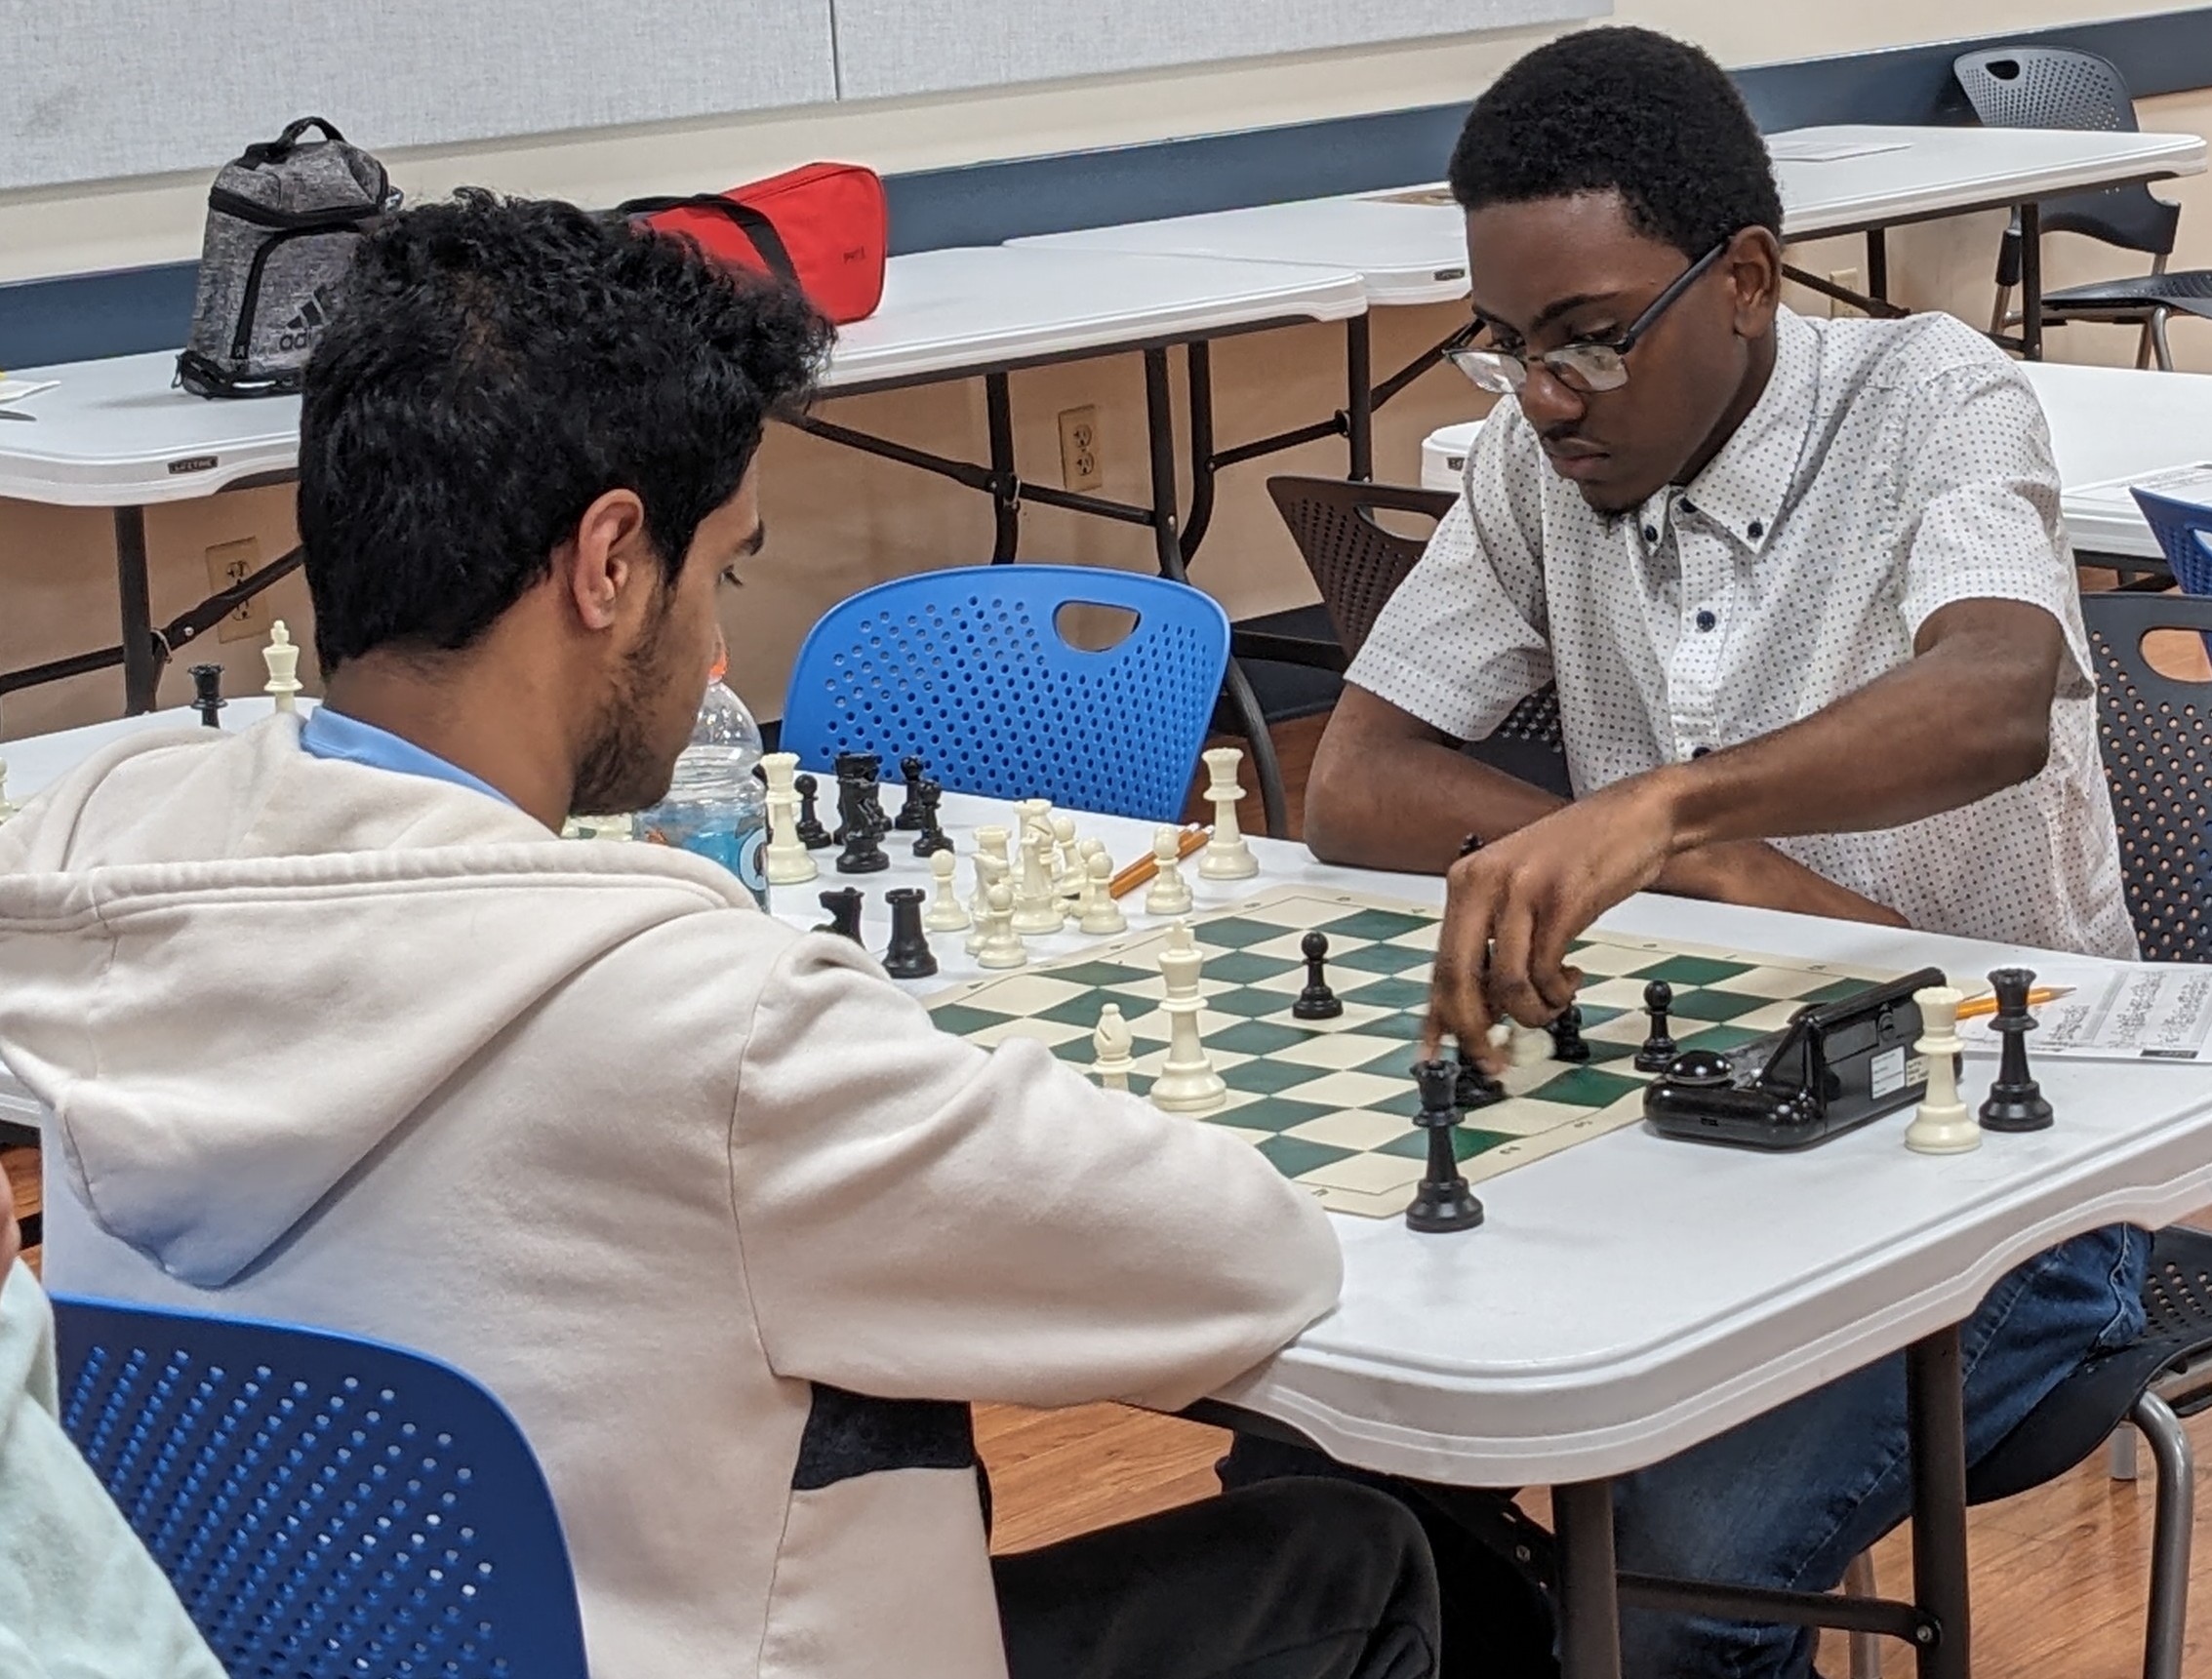 The Grand Pacific's Open Chess Tournament